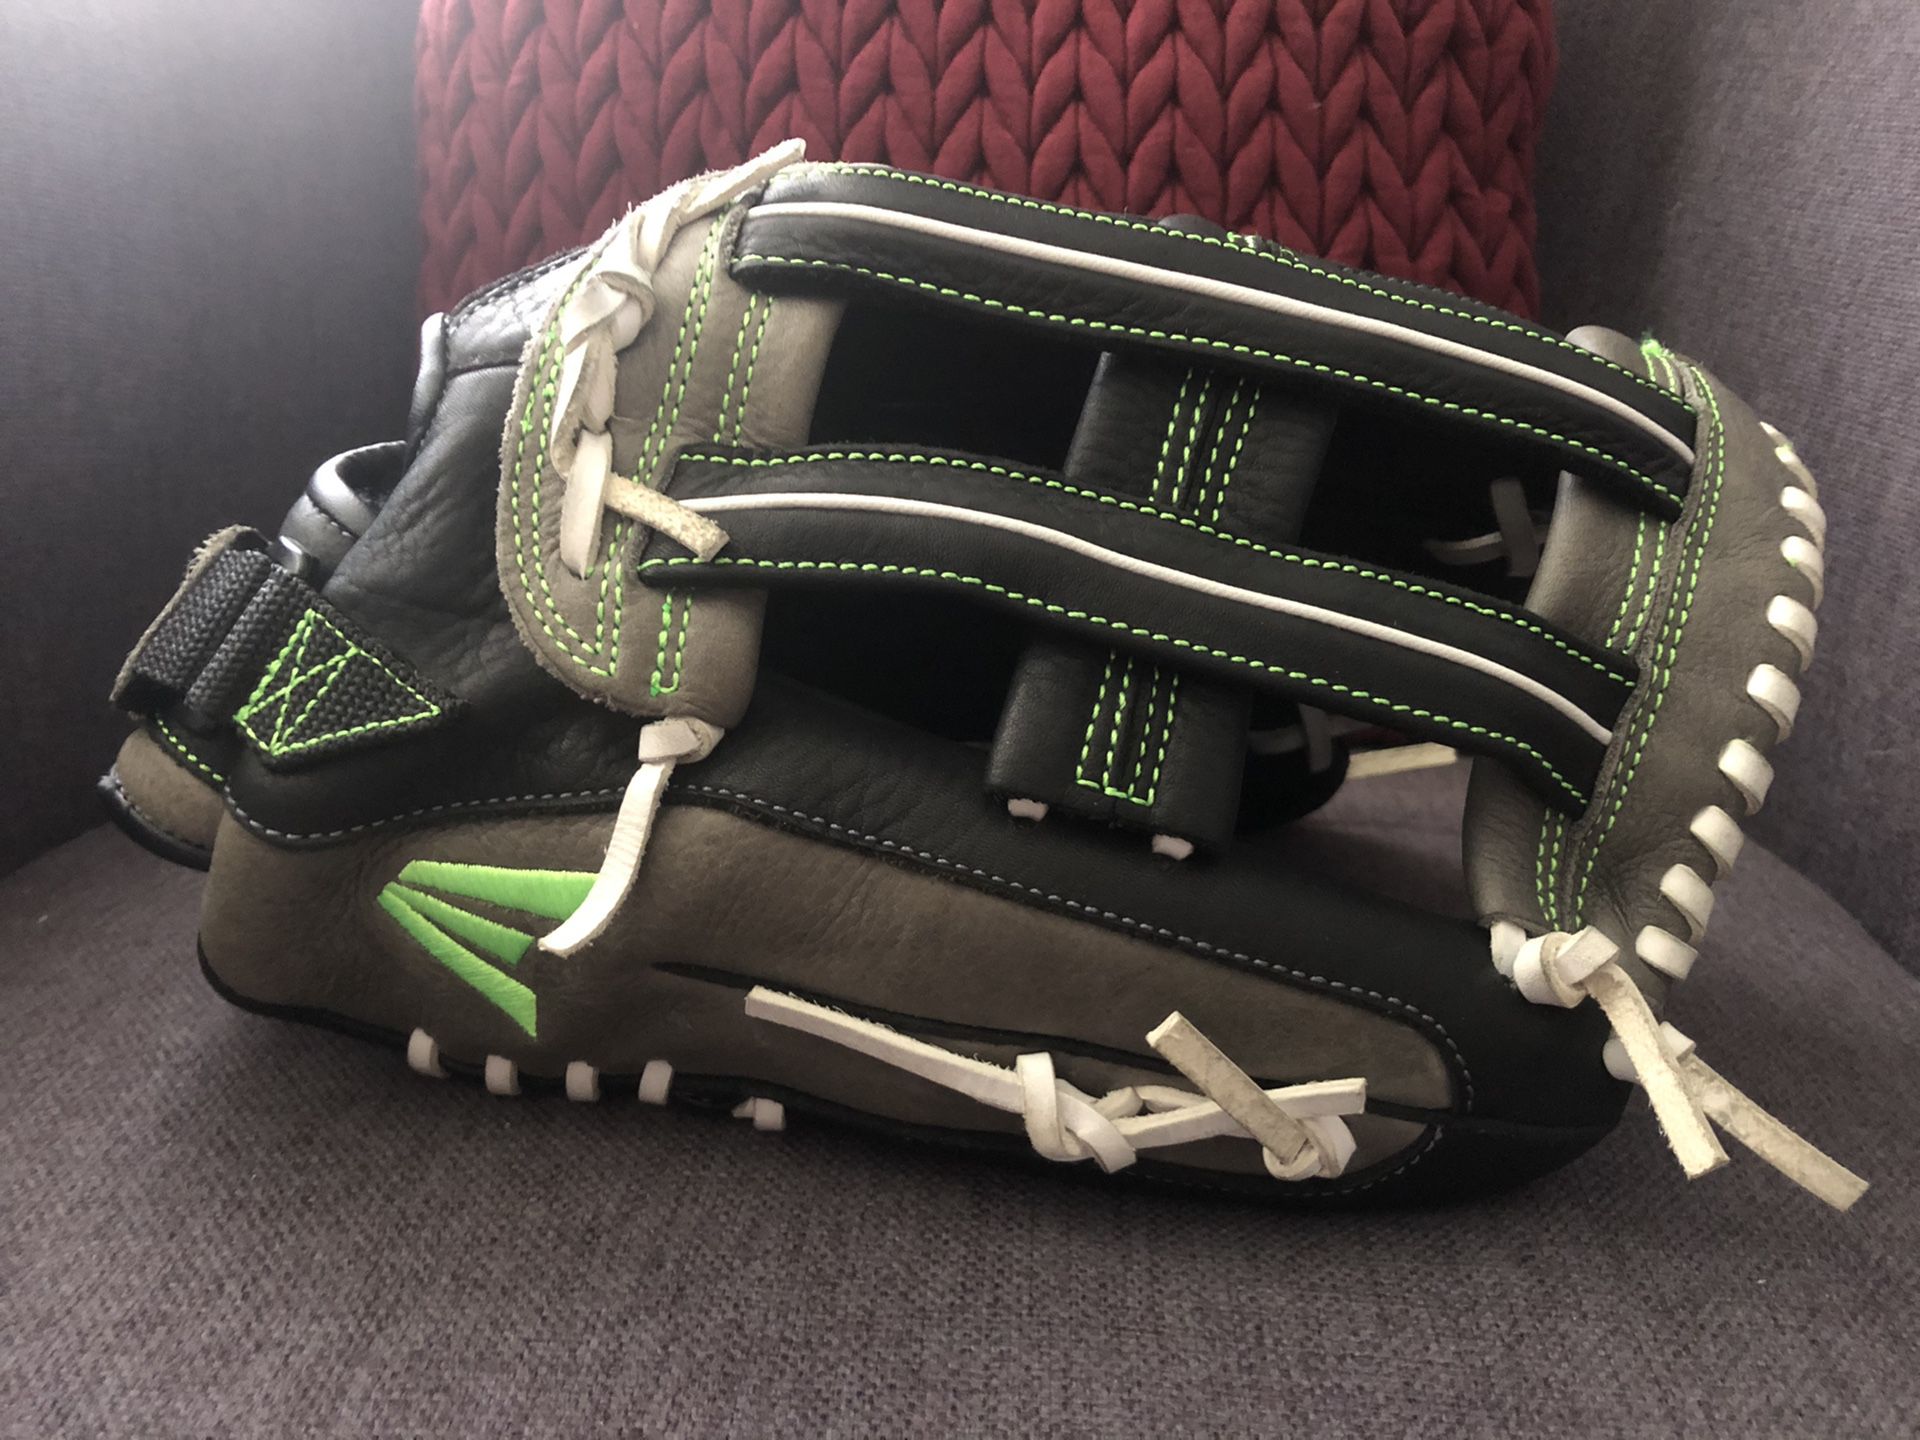 Easton Salvo Elite 14” softball glove